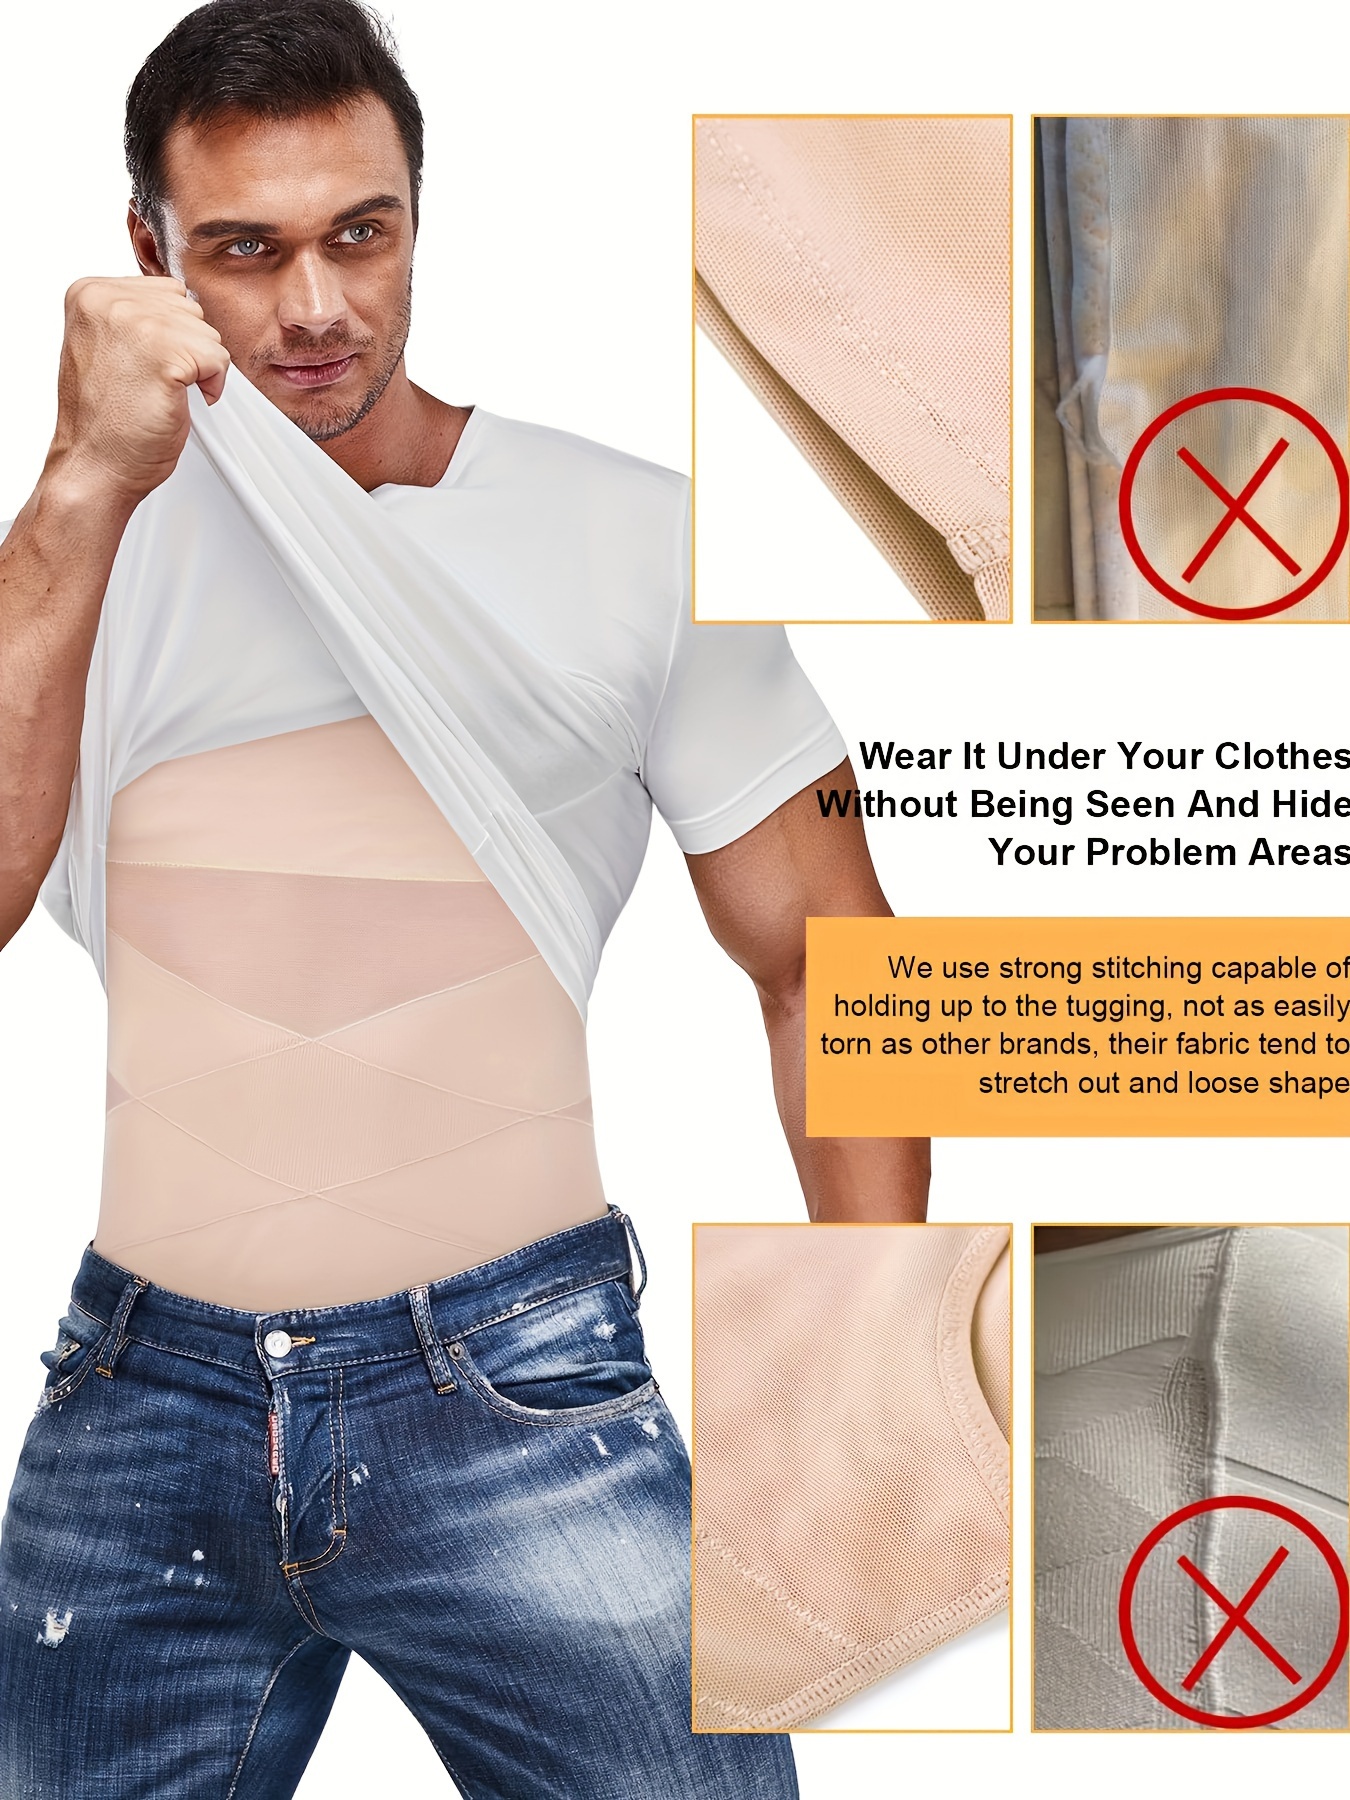 Men's Slimming Body Shaper Posture Corrector Abdomen Compression Shirt Vest  Tops